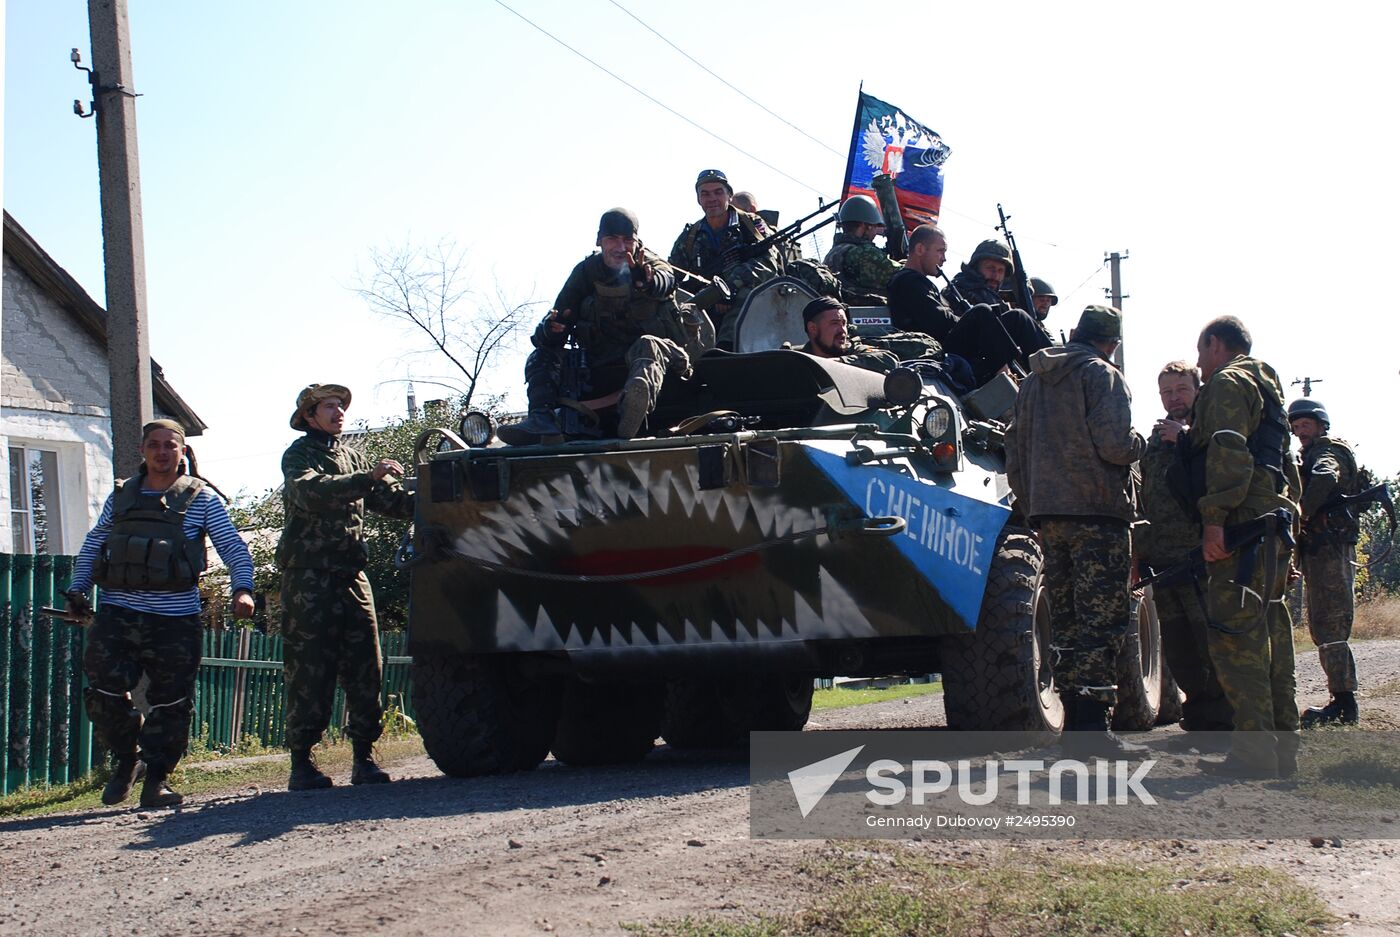 Donetsk region update